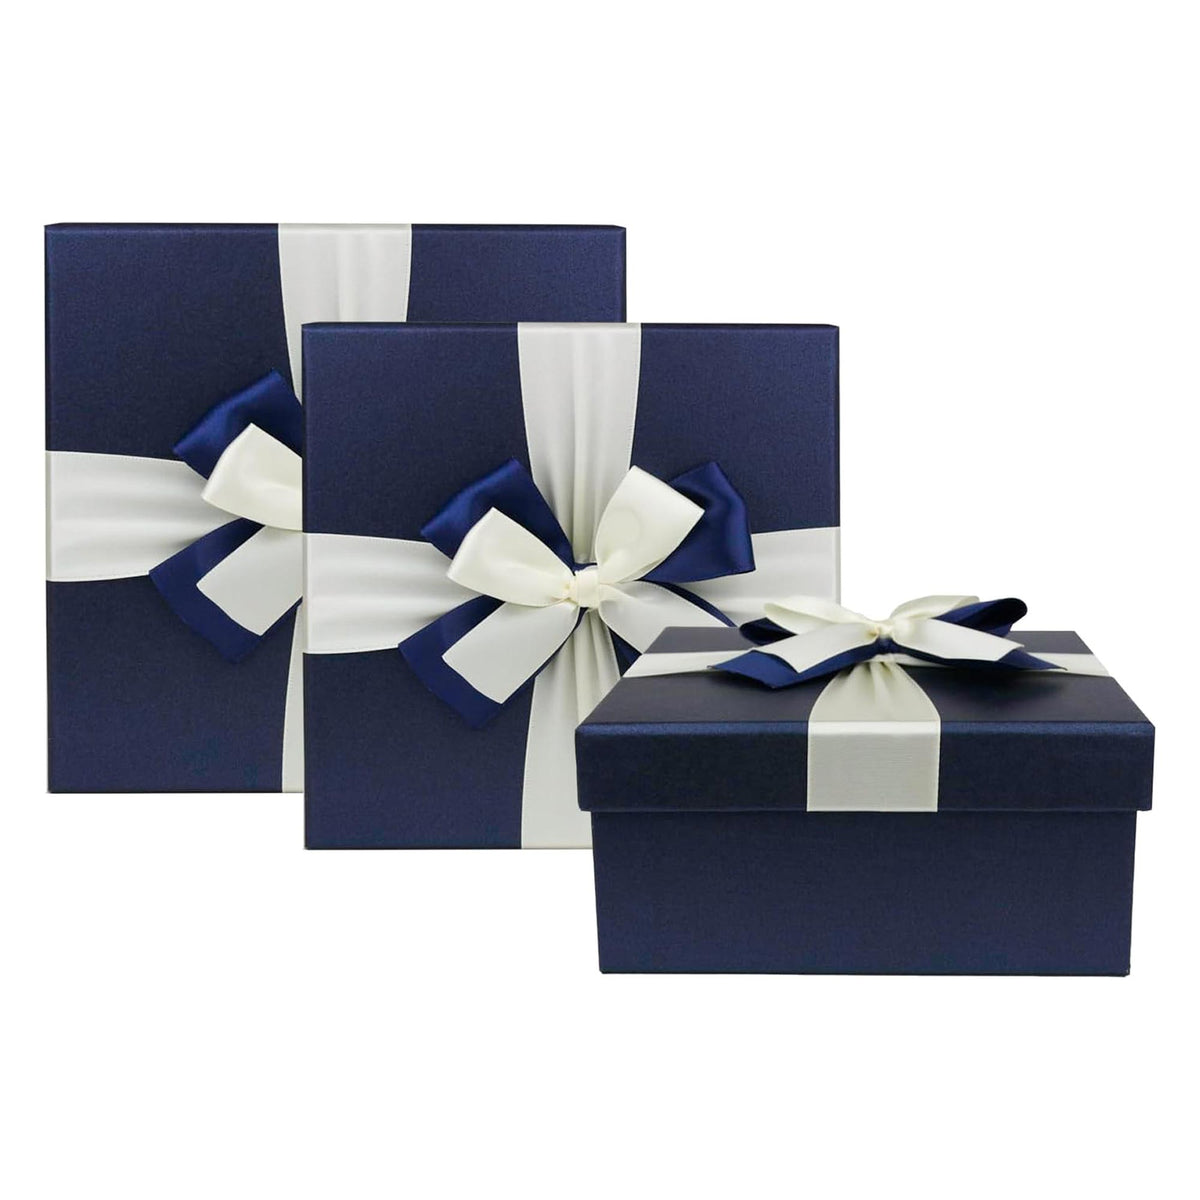 Luxury Blue Gift Boxes - Set of 3